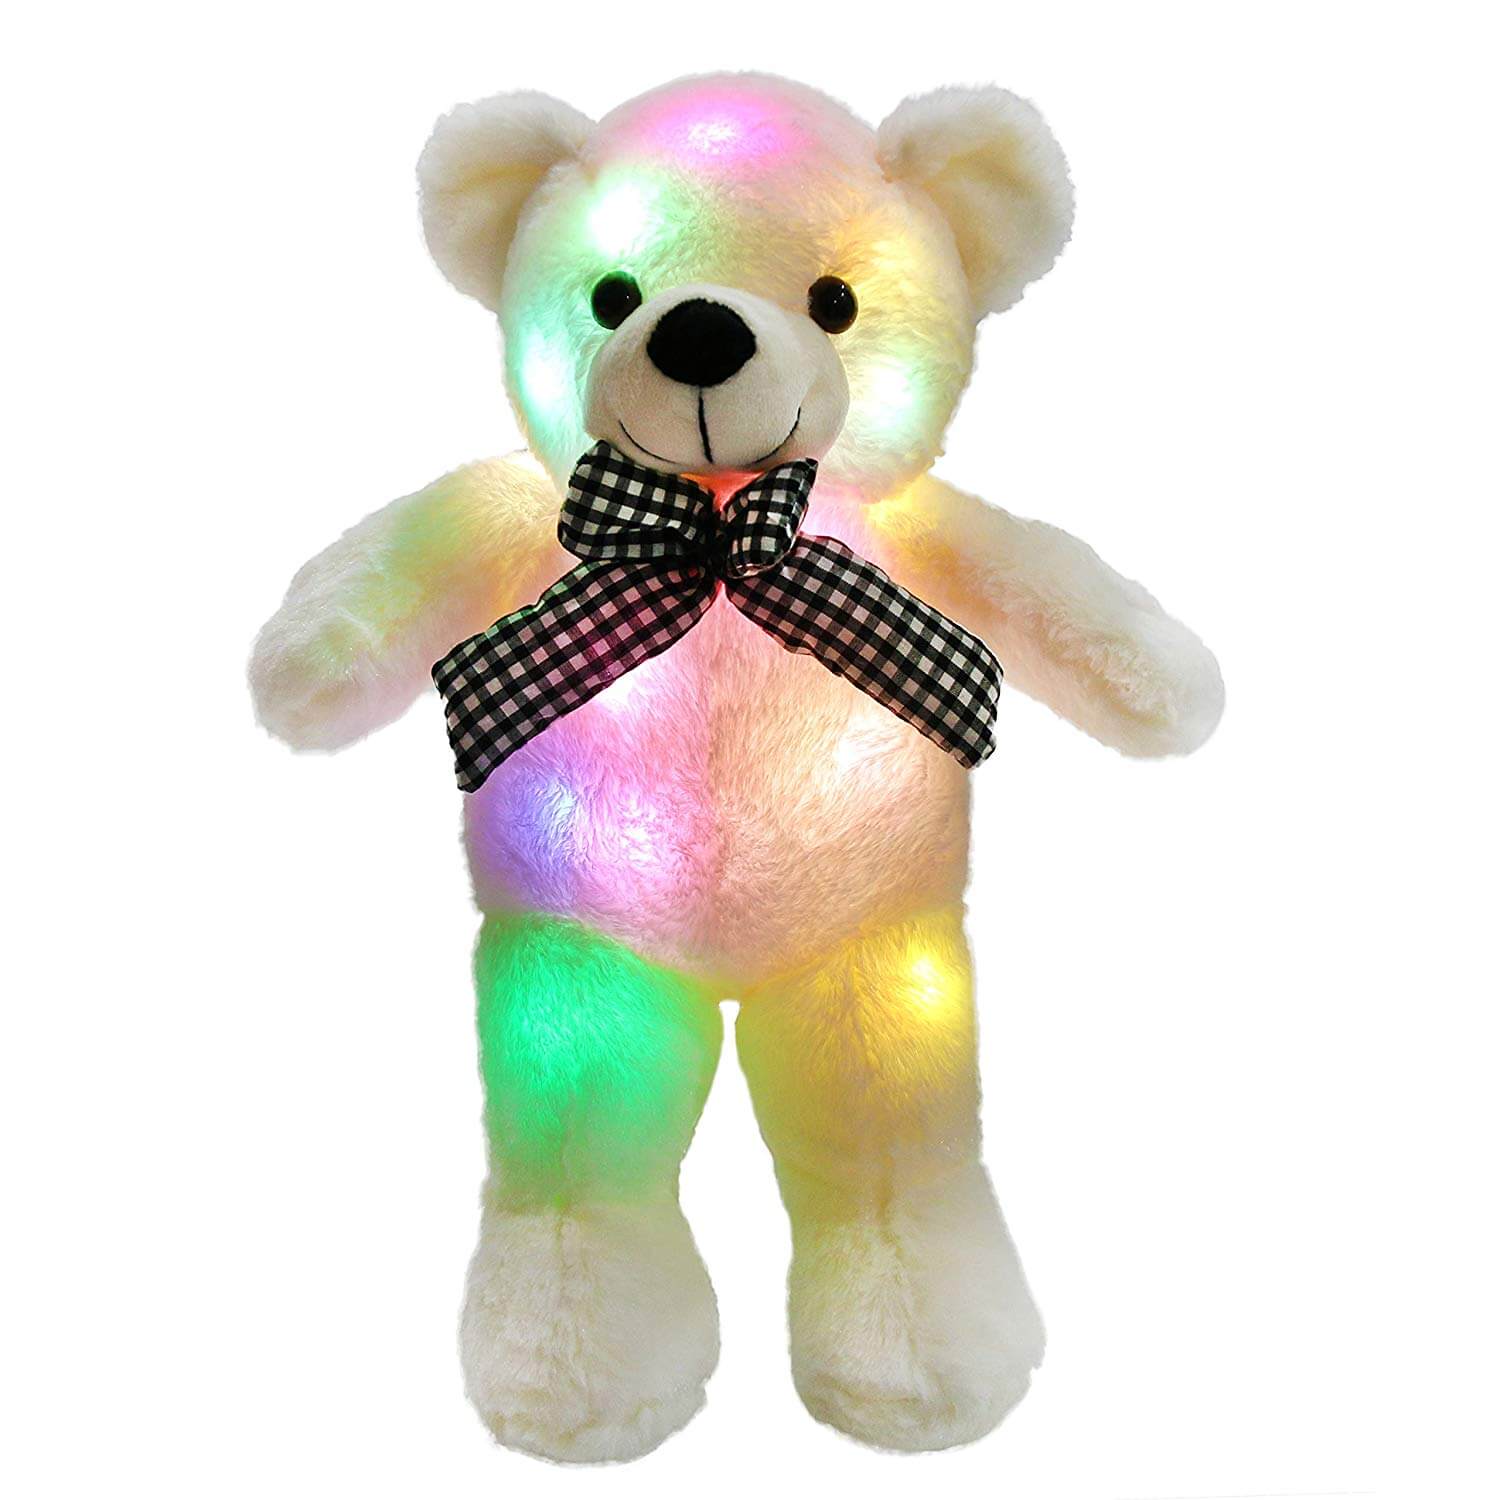 glow teddy bear night light plush toy, 17''| Bstaofy - Glow Guards